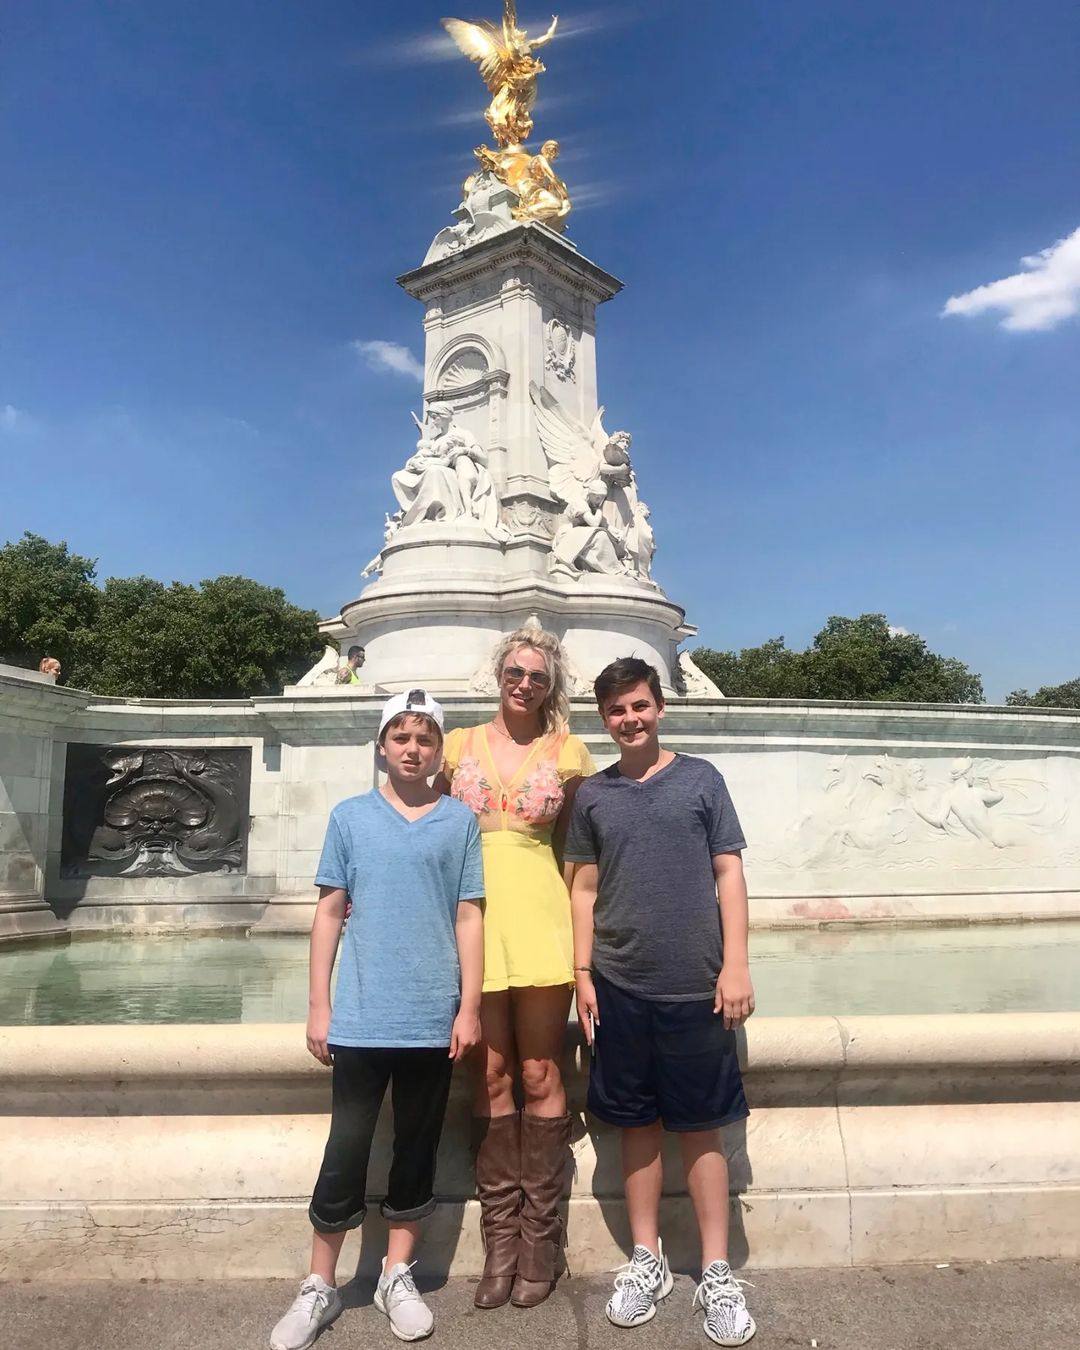 Britney Spears with her sons, Sean and Jayden, in front of the statue of Eros in London a few years ago. Photo: @prestonandjayden/Instagram